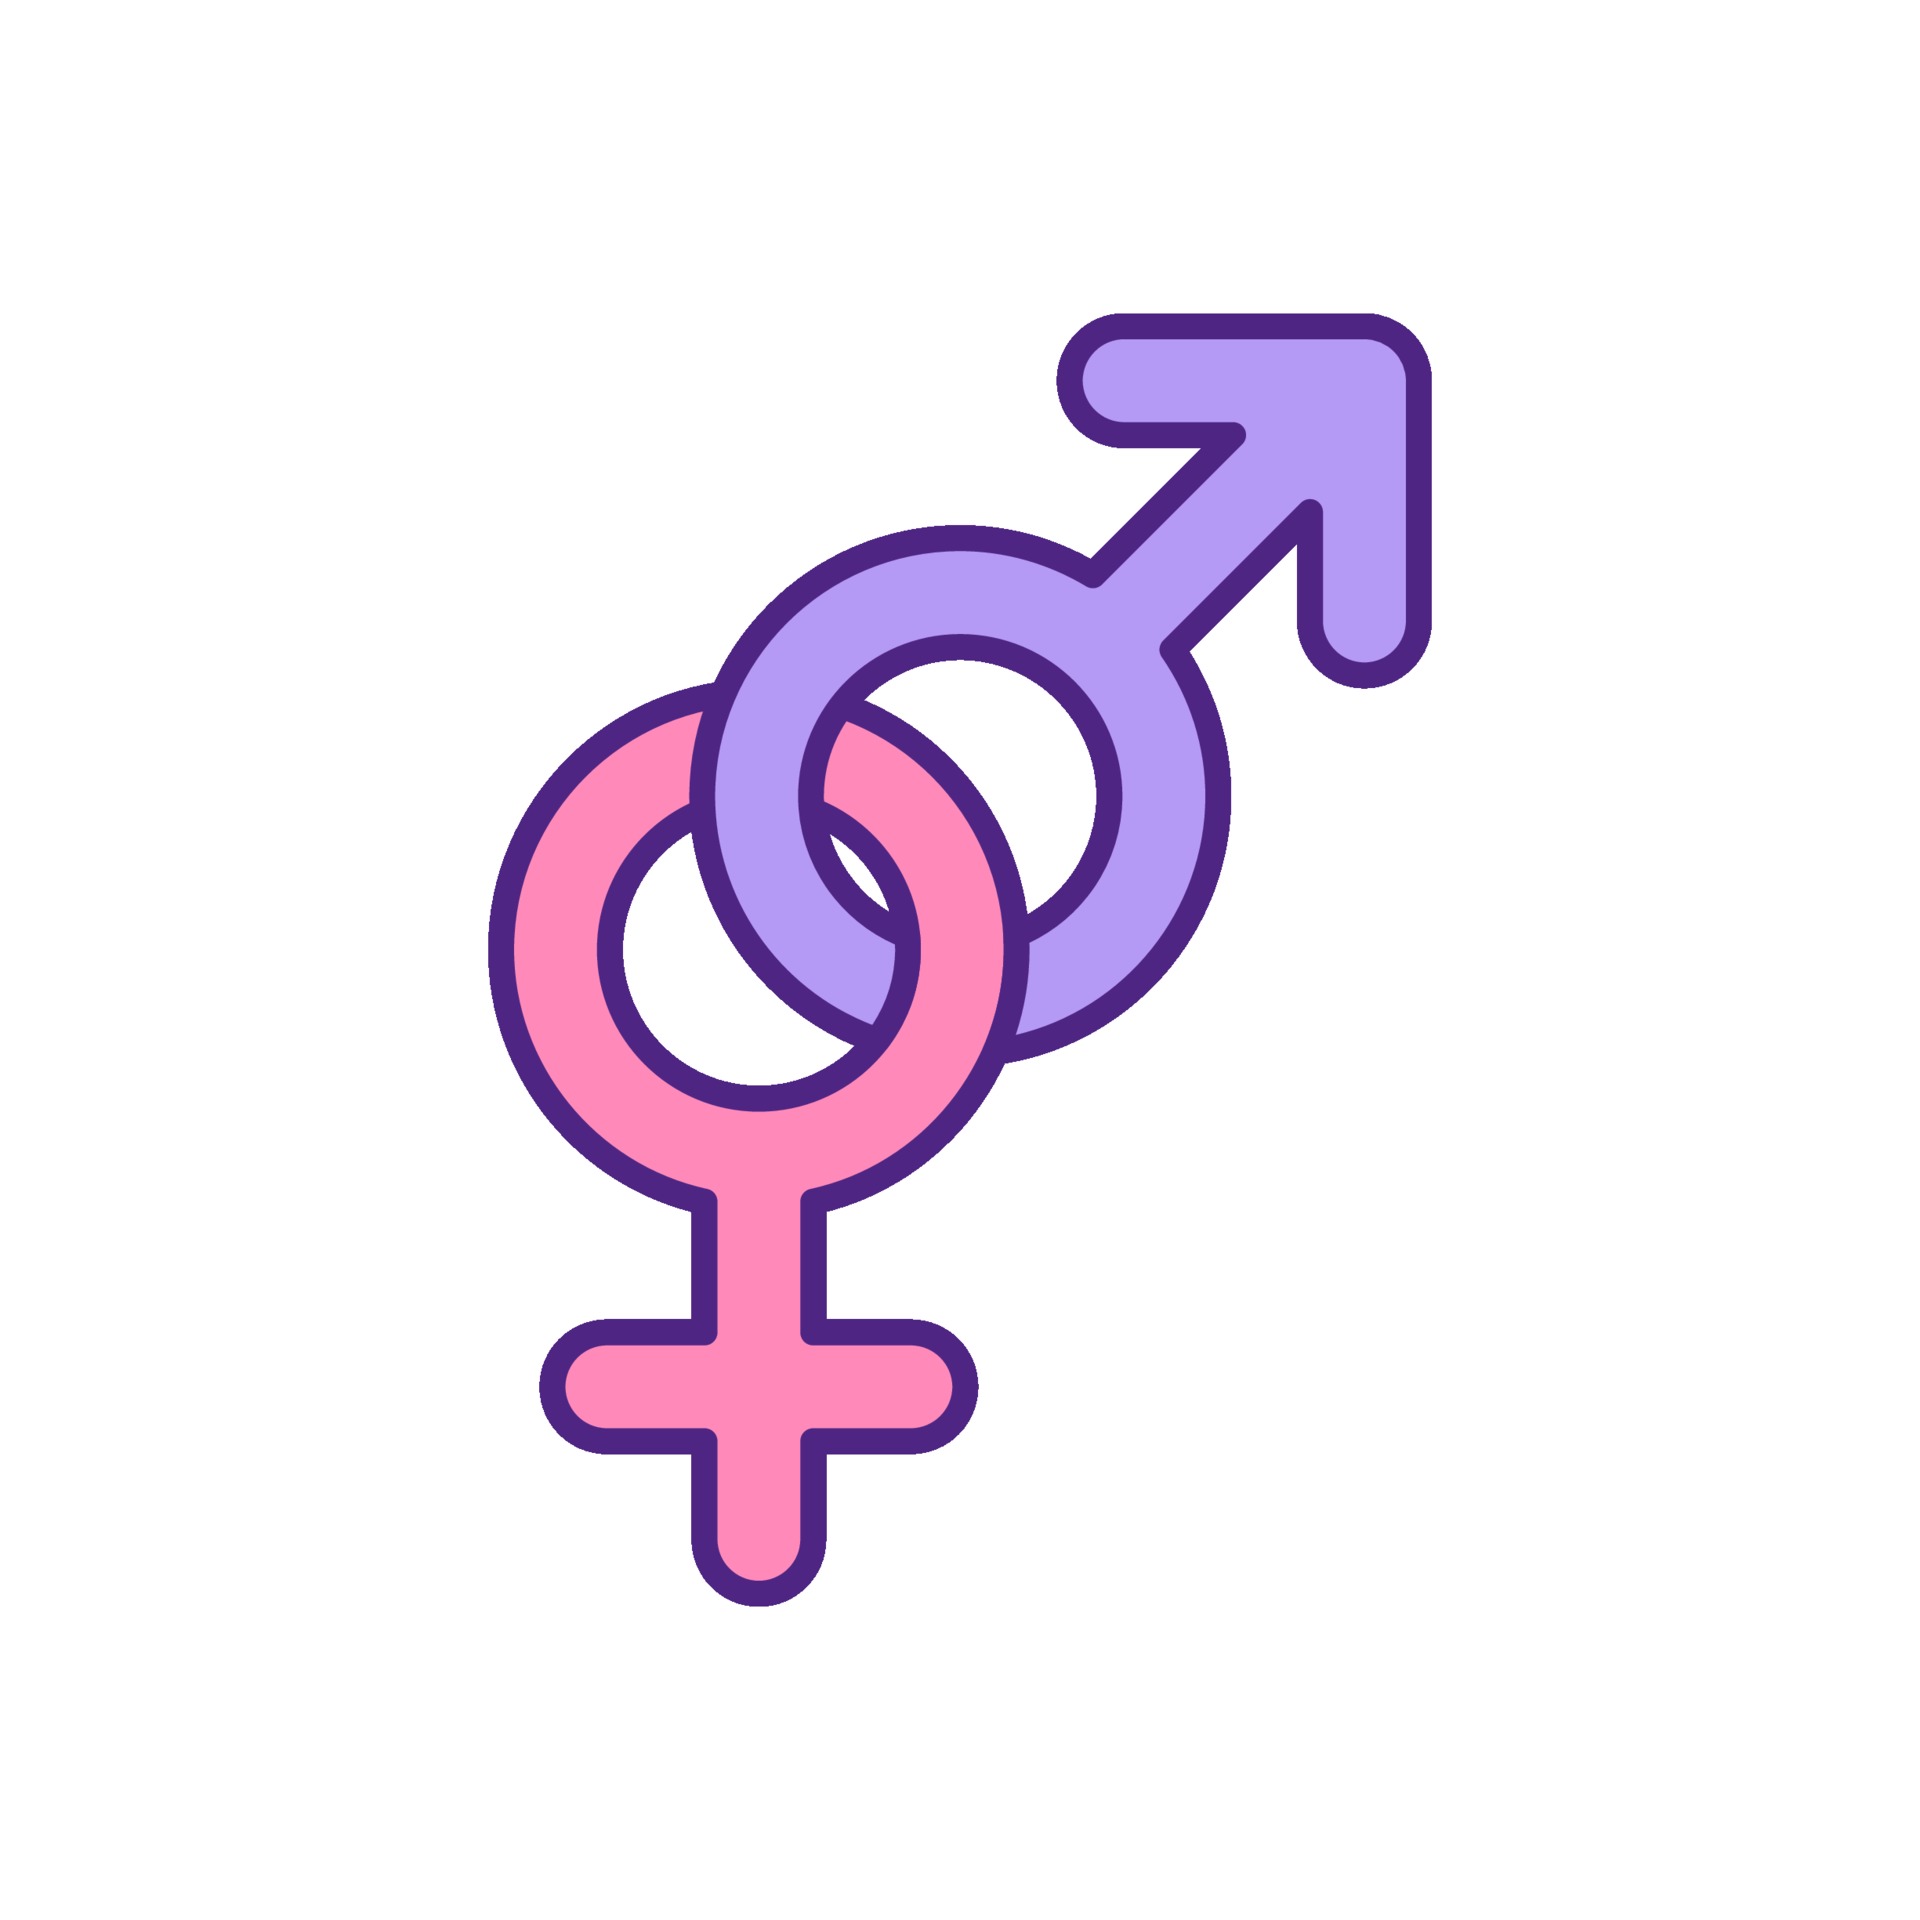 Male Female Symbol Combined